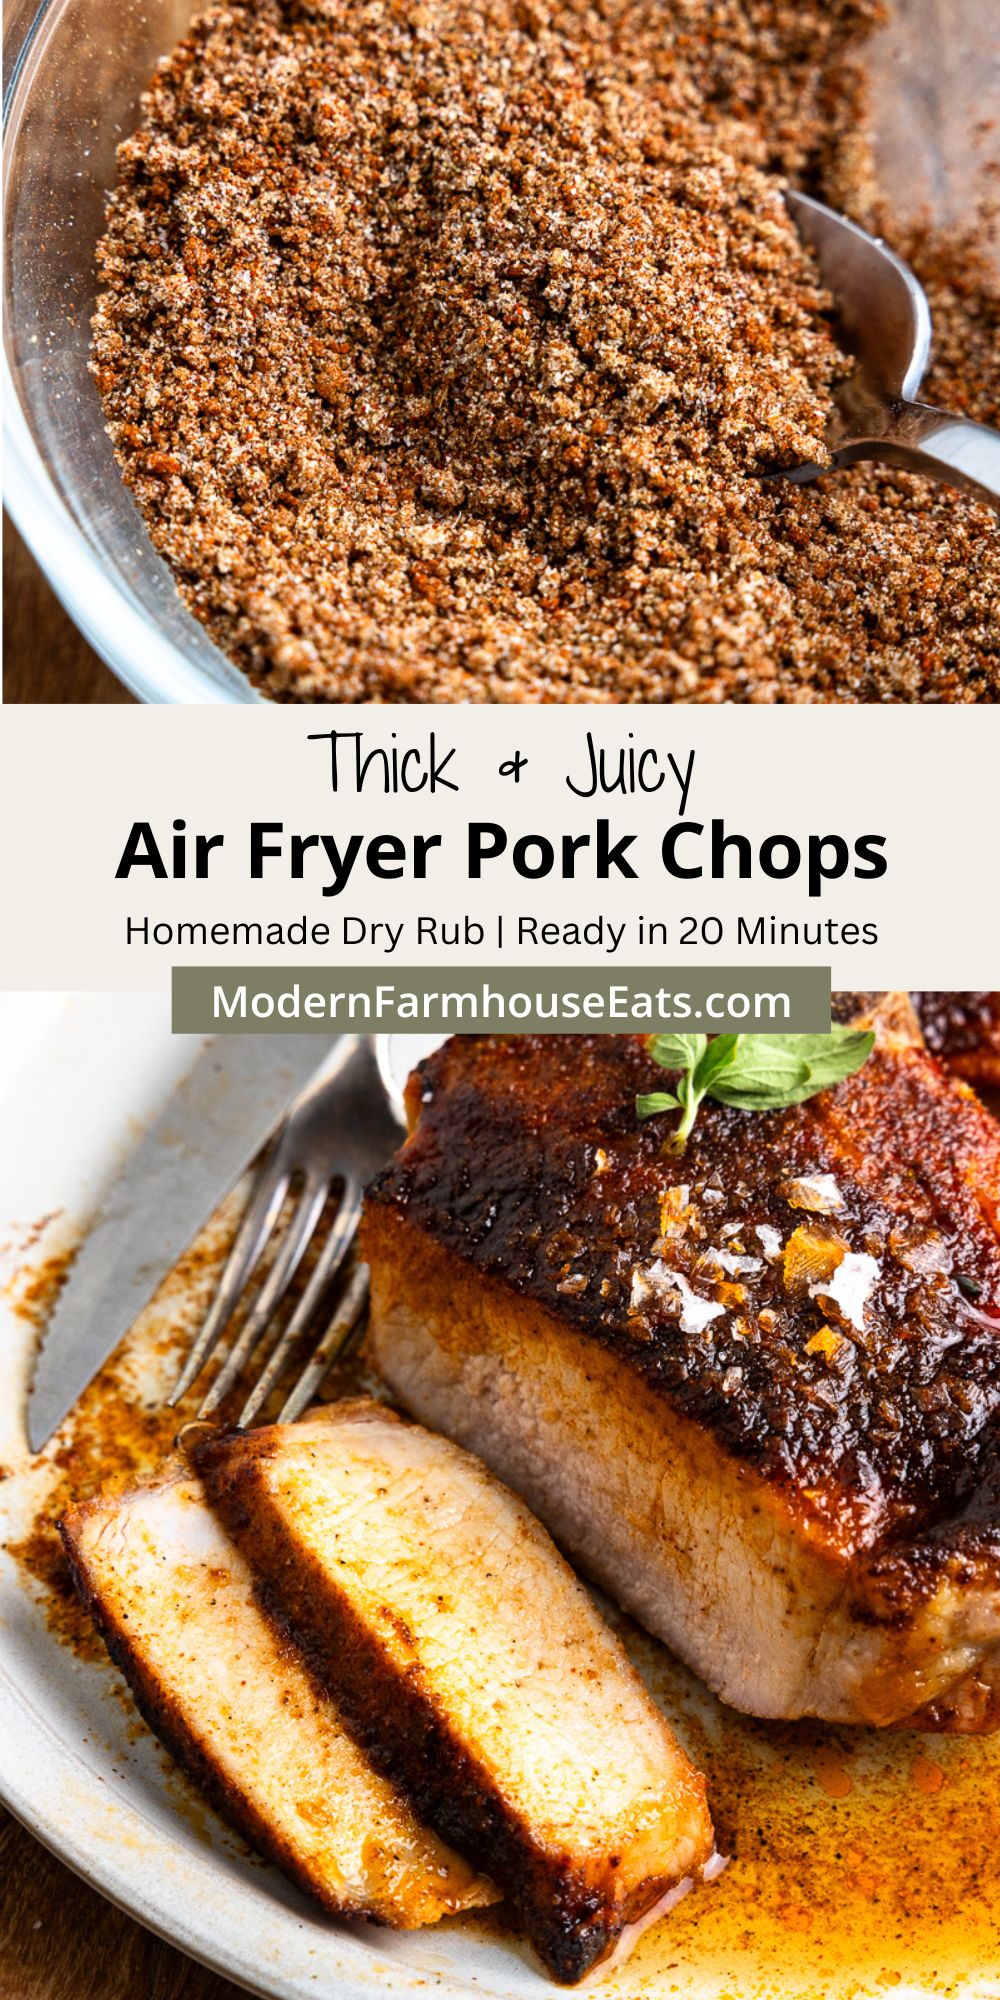 cook boneless pork chops in air fryer